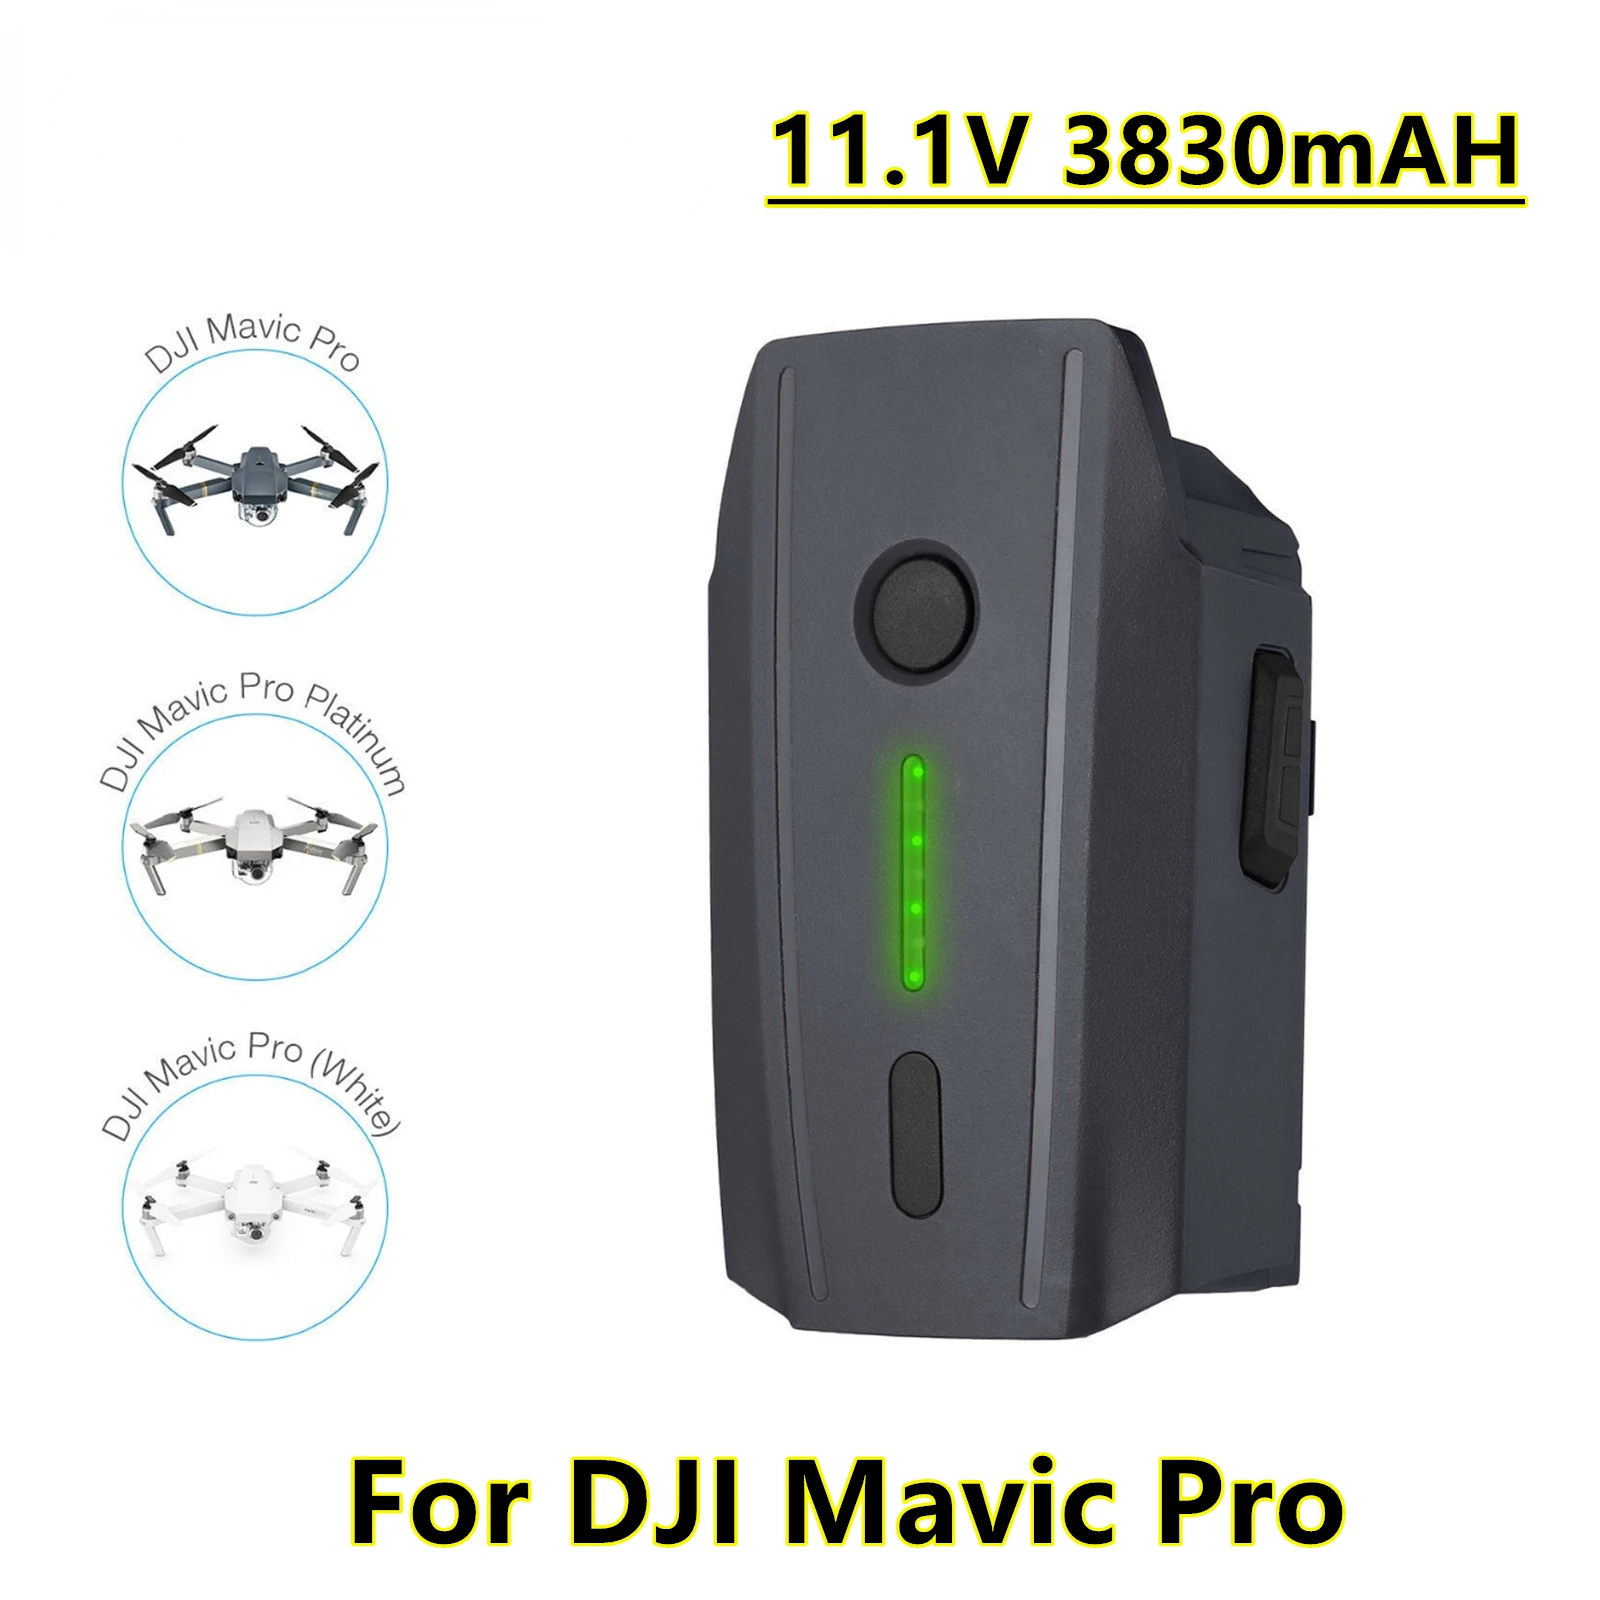 

DJI Mavic Pro Battery Intelligent Flight (3830mAh/11.4V) Specially Designed For The Mavic Drone